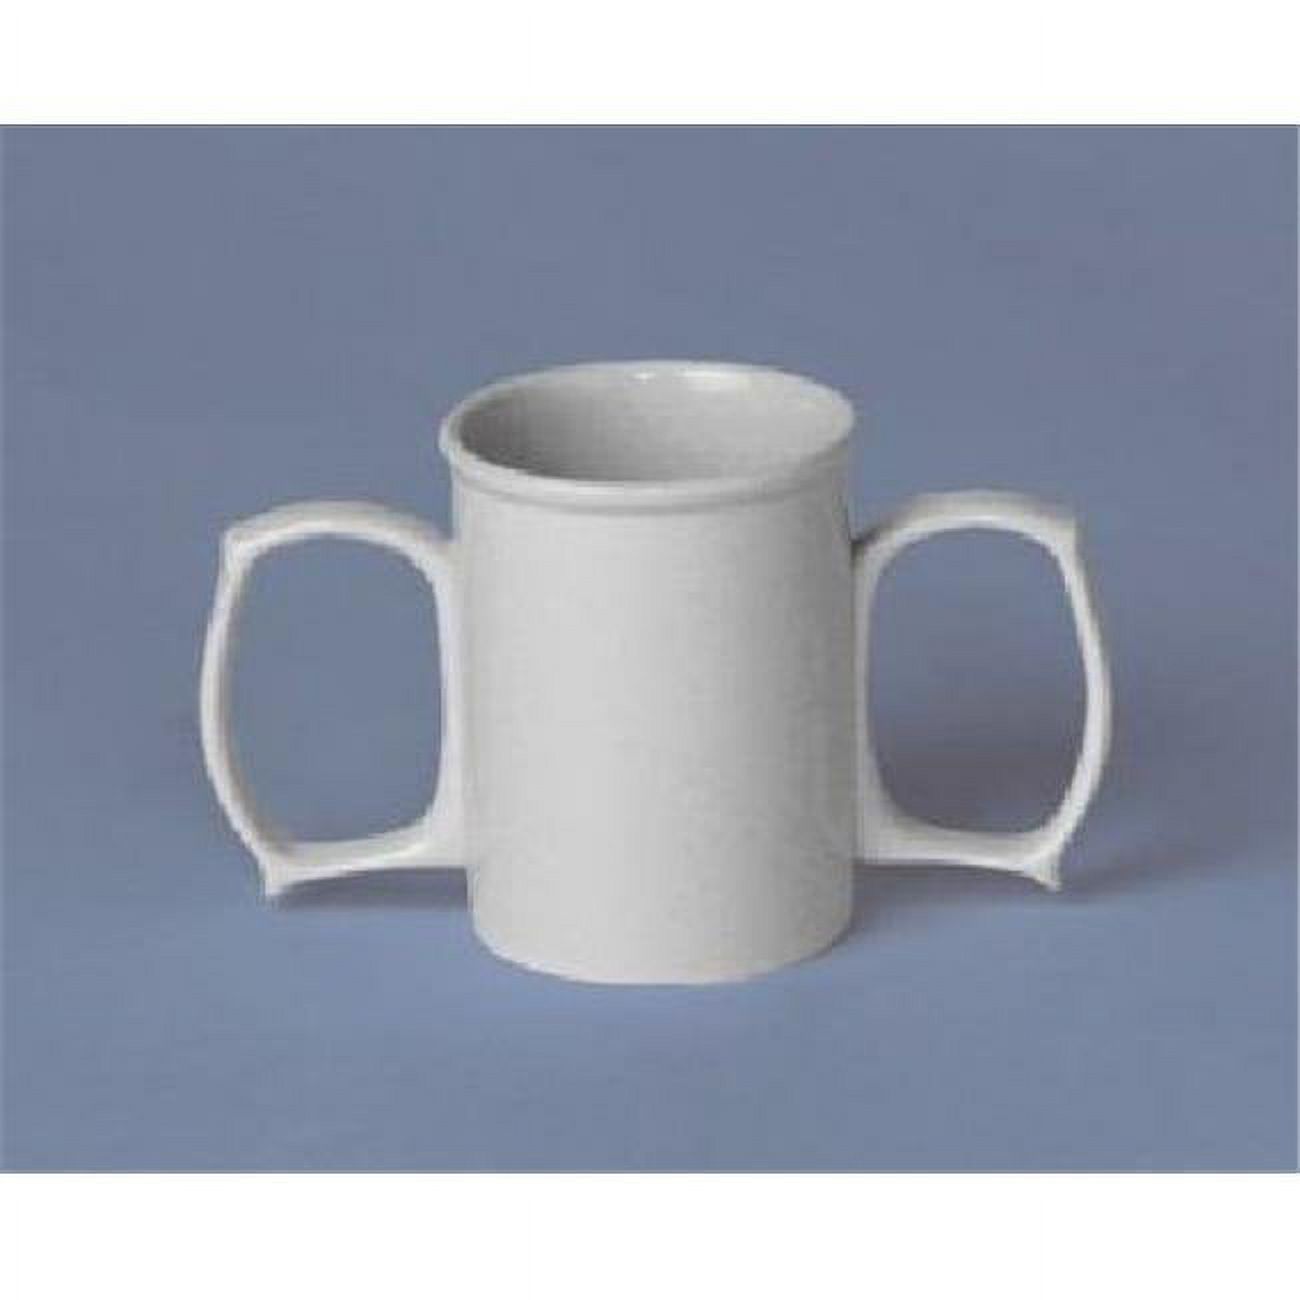 Granny Jo Products 0901 Dignity Mug Set- 2 Units - image 1 of 2